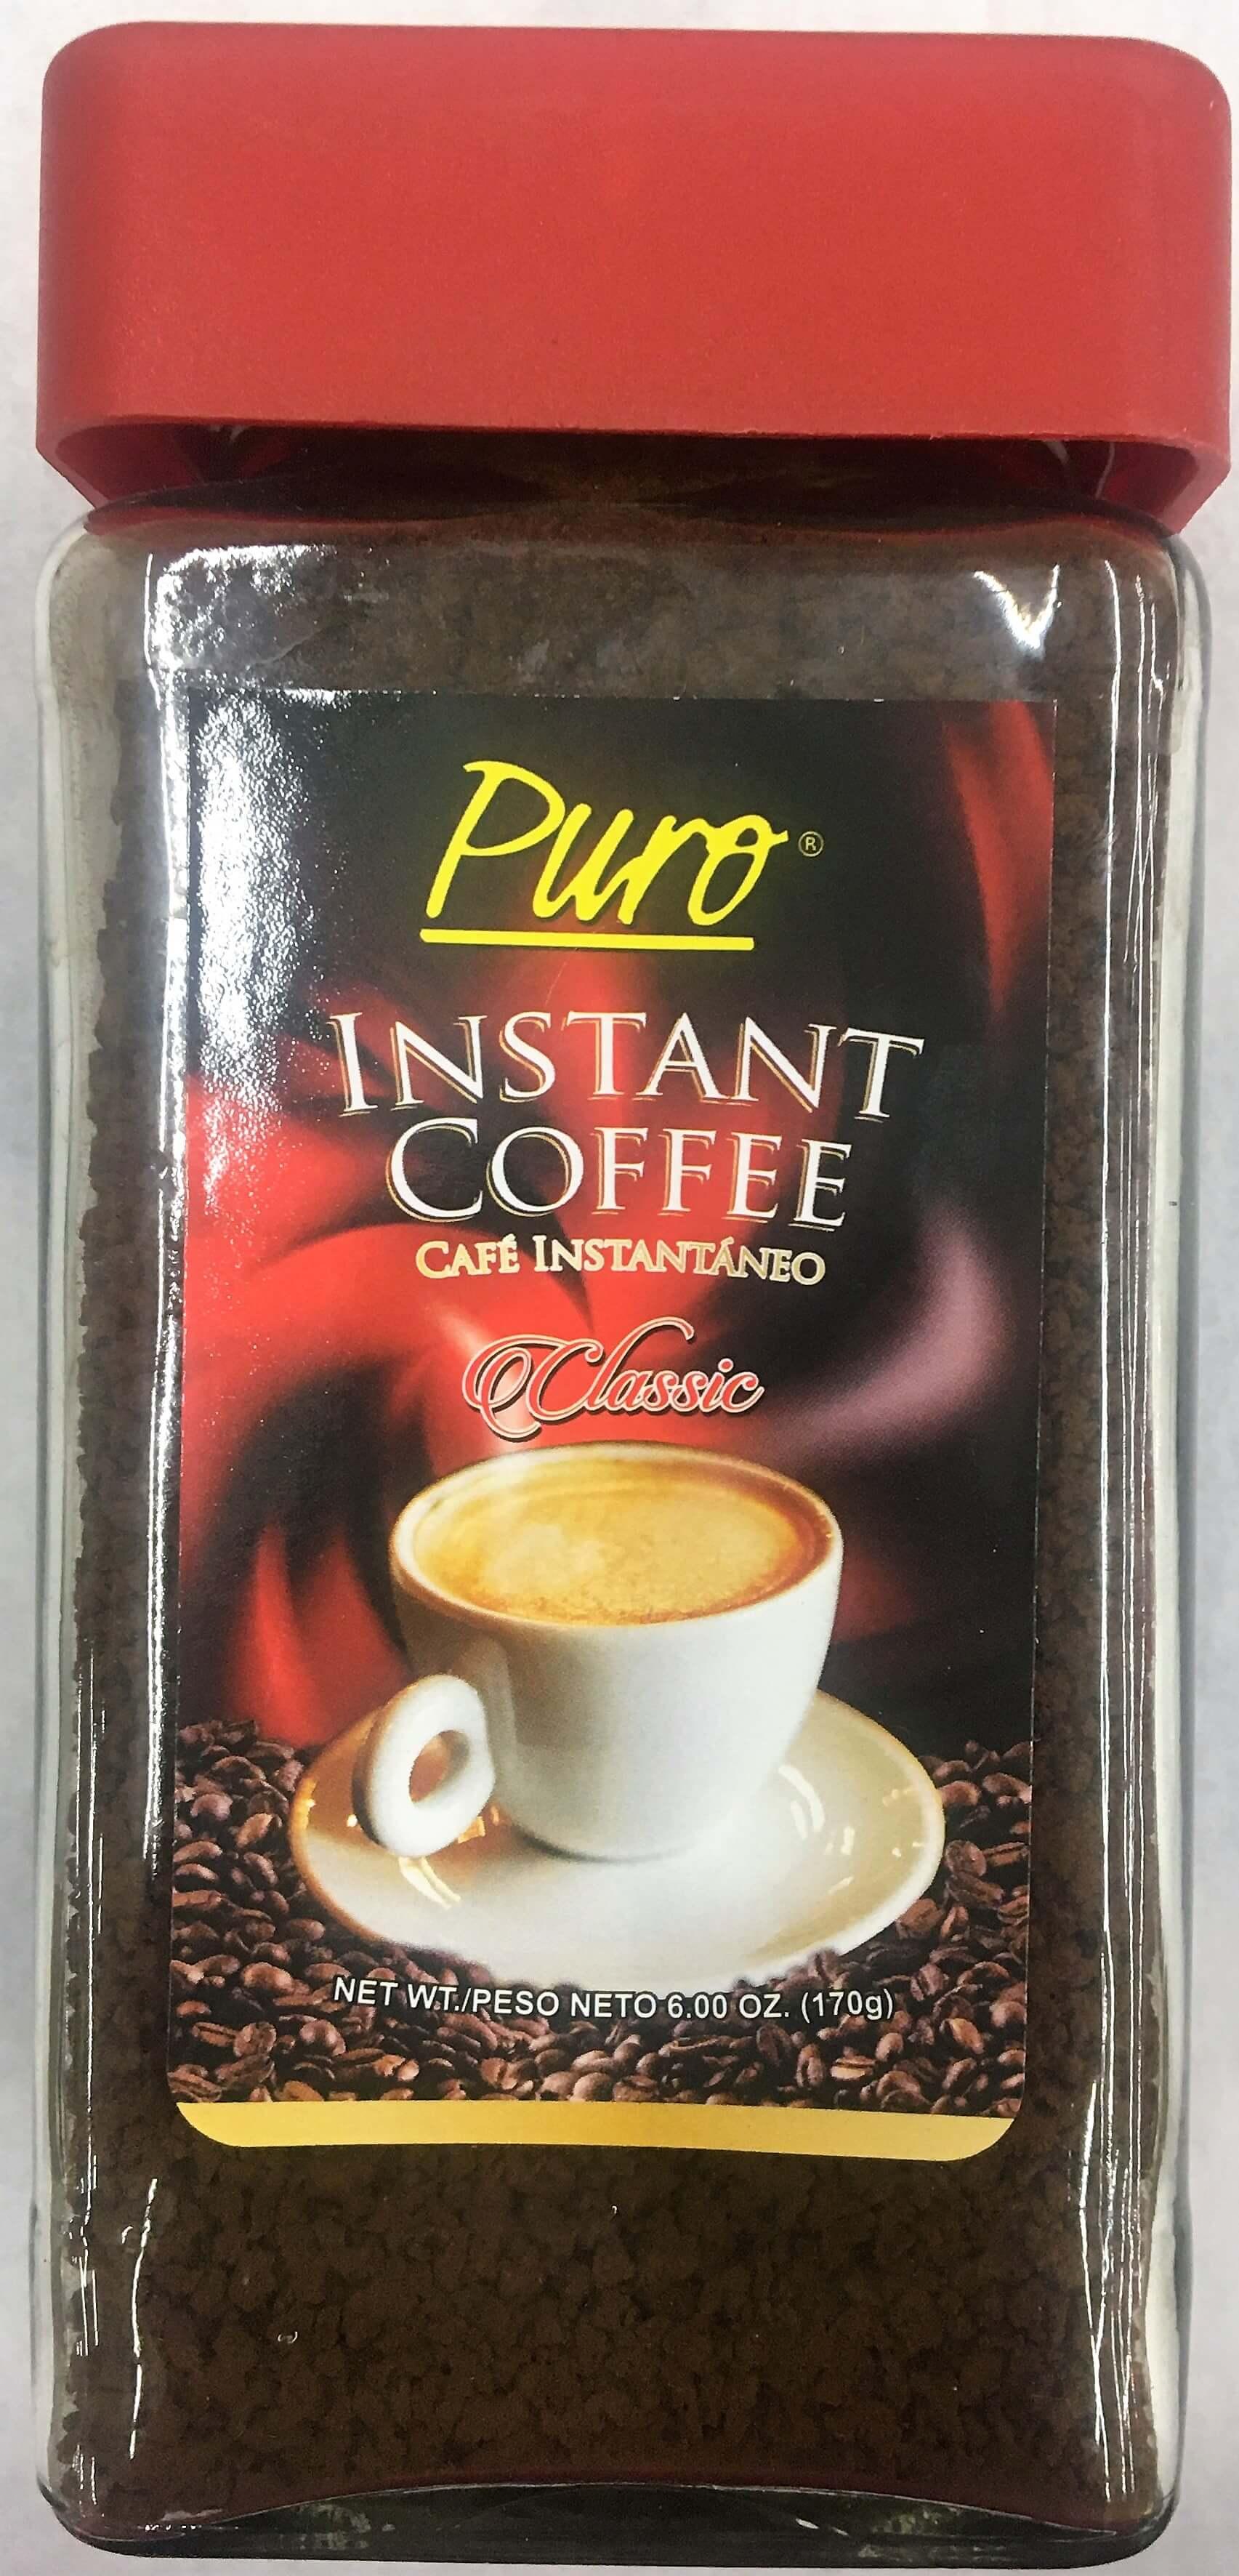 Puro - Instant Coffee Classic 6 oz